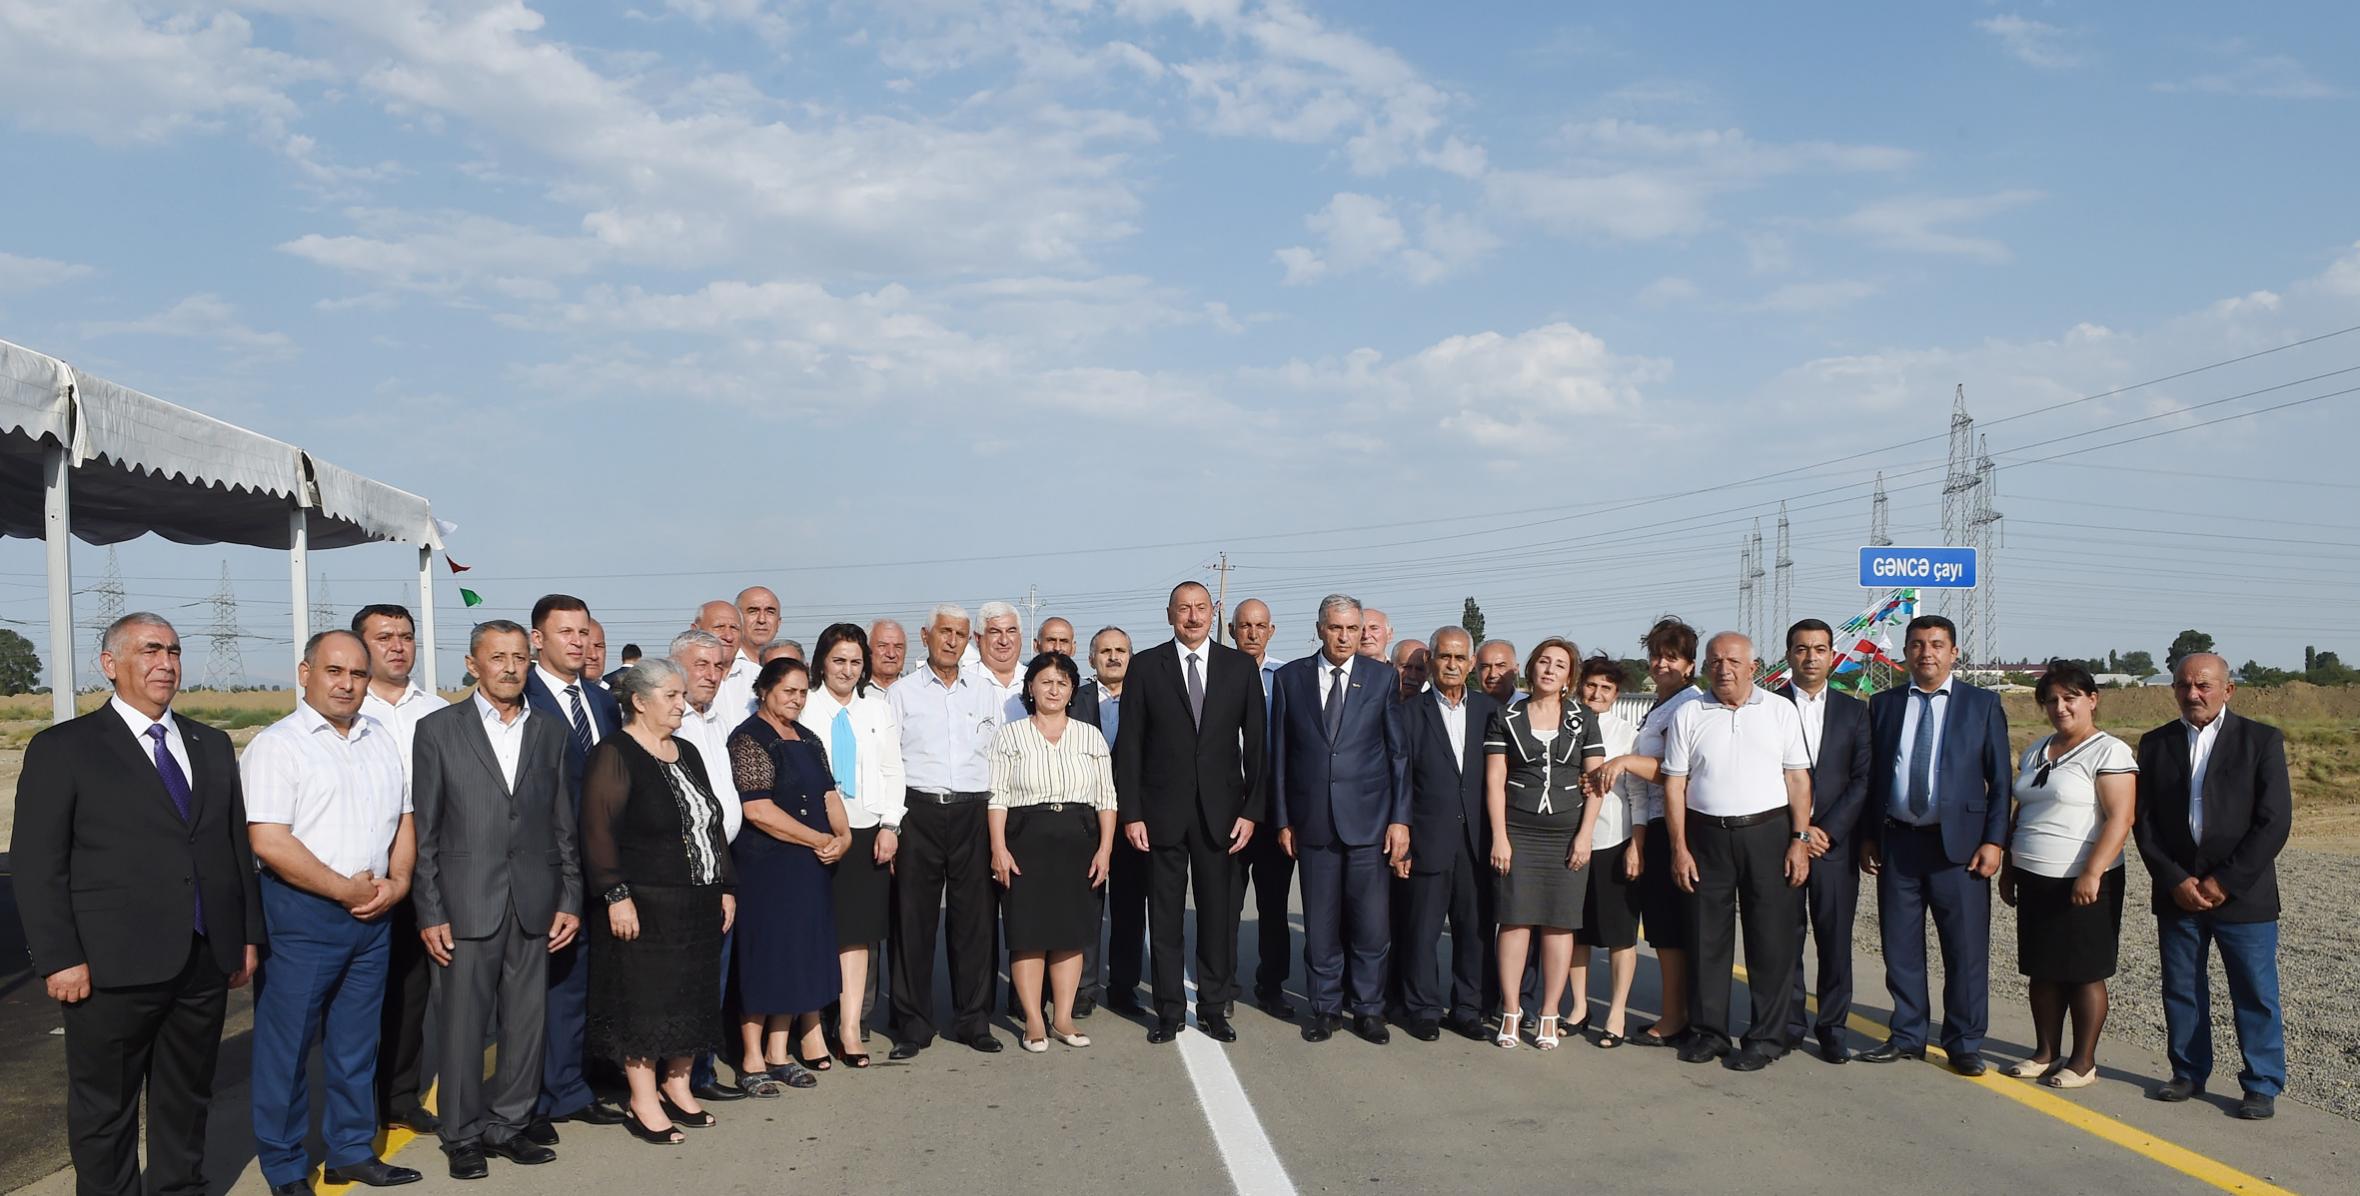 Ильхам Алиев принял участие в открытии автомобильной дороги Самух-Физули-Ляк-Алибайрамлы-Гарабаглар-Чобанабдаллы-Самух